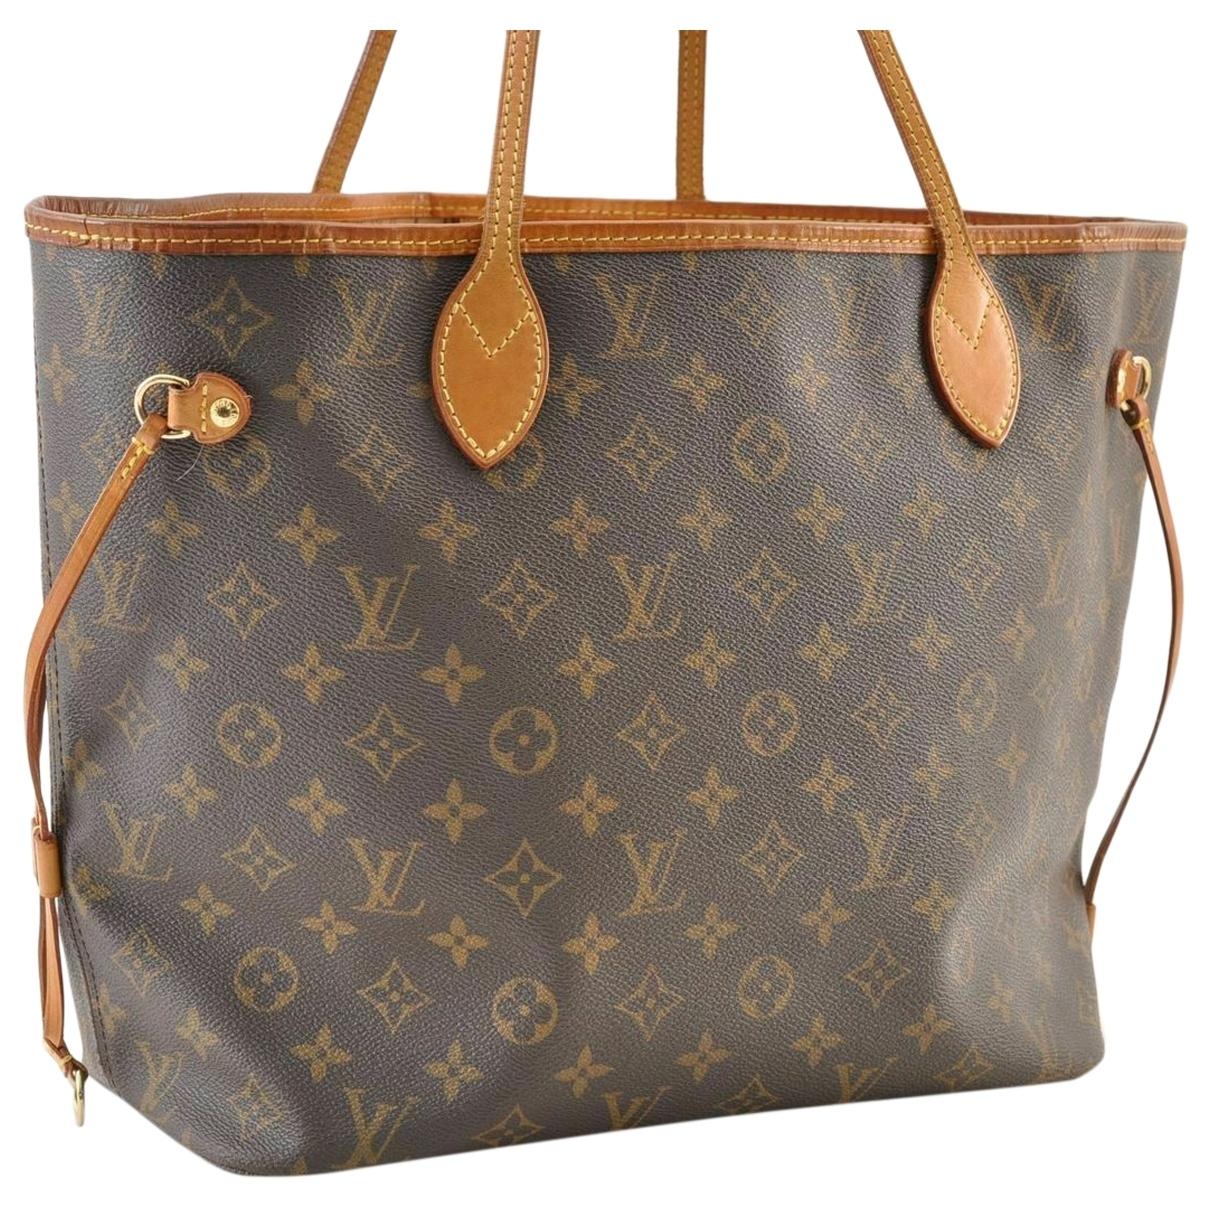 Lyst - Louis Vuitton Neverfull Brown Cloth Handbag in Brown - Save 5%